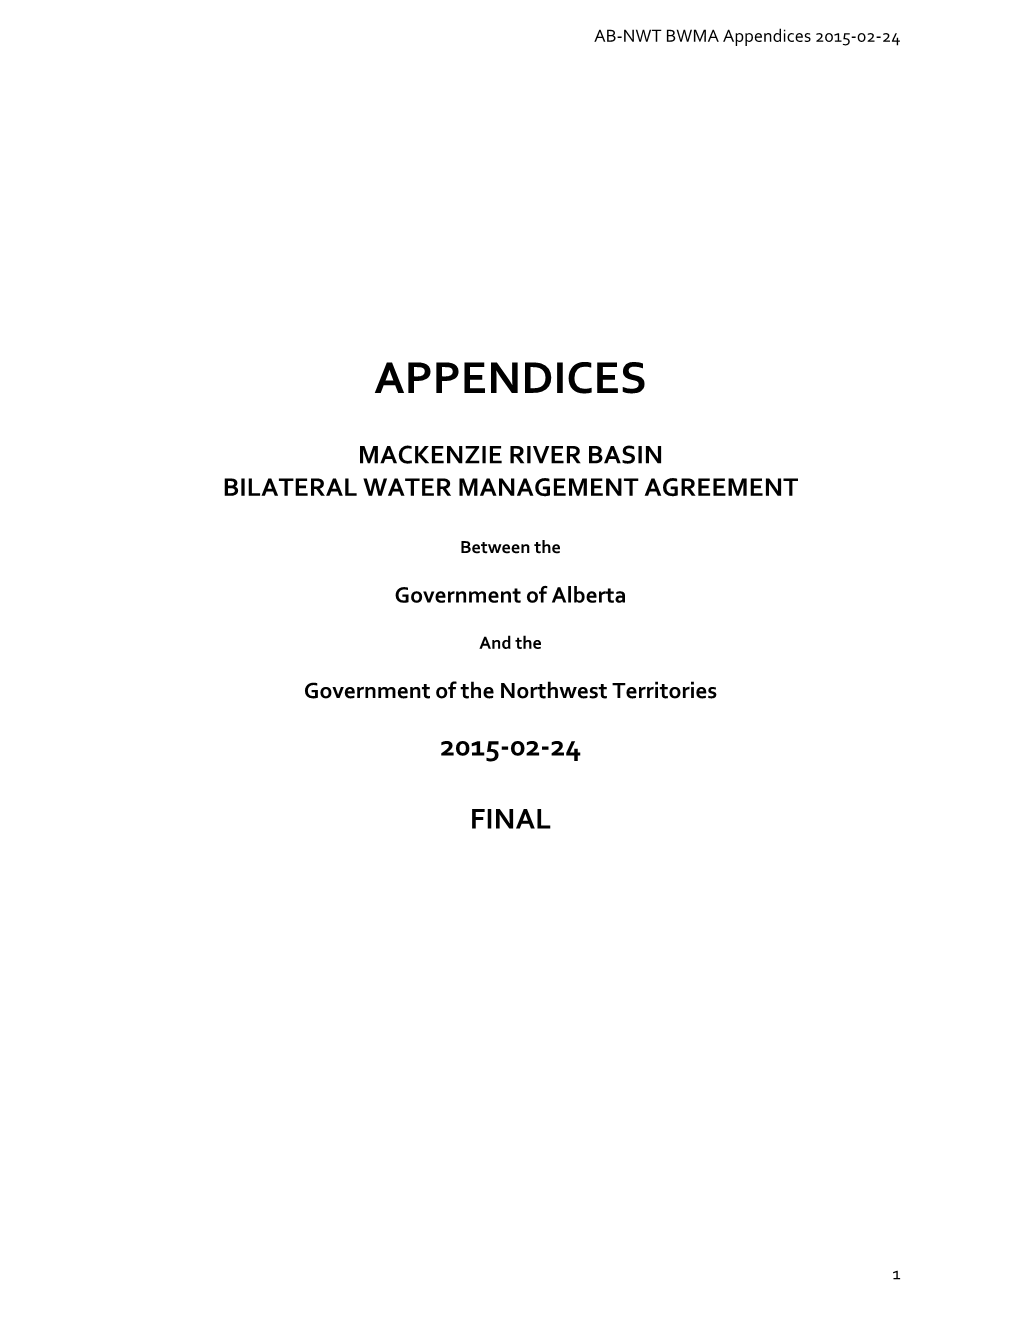 Mackenzie River Basin Bilateral Water Management Agreement